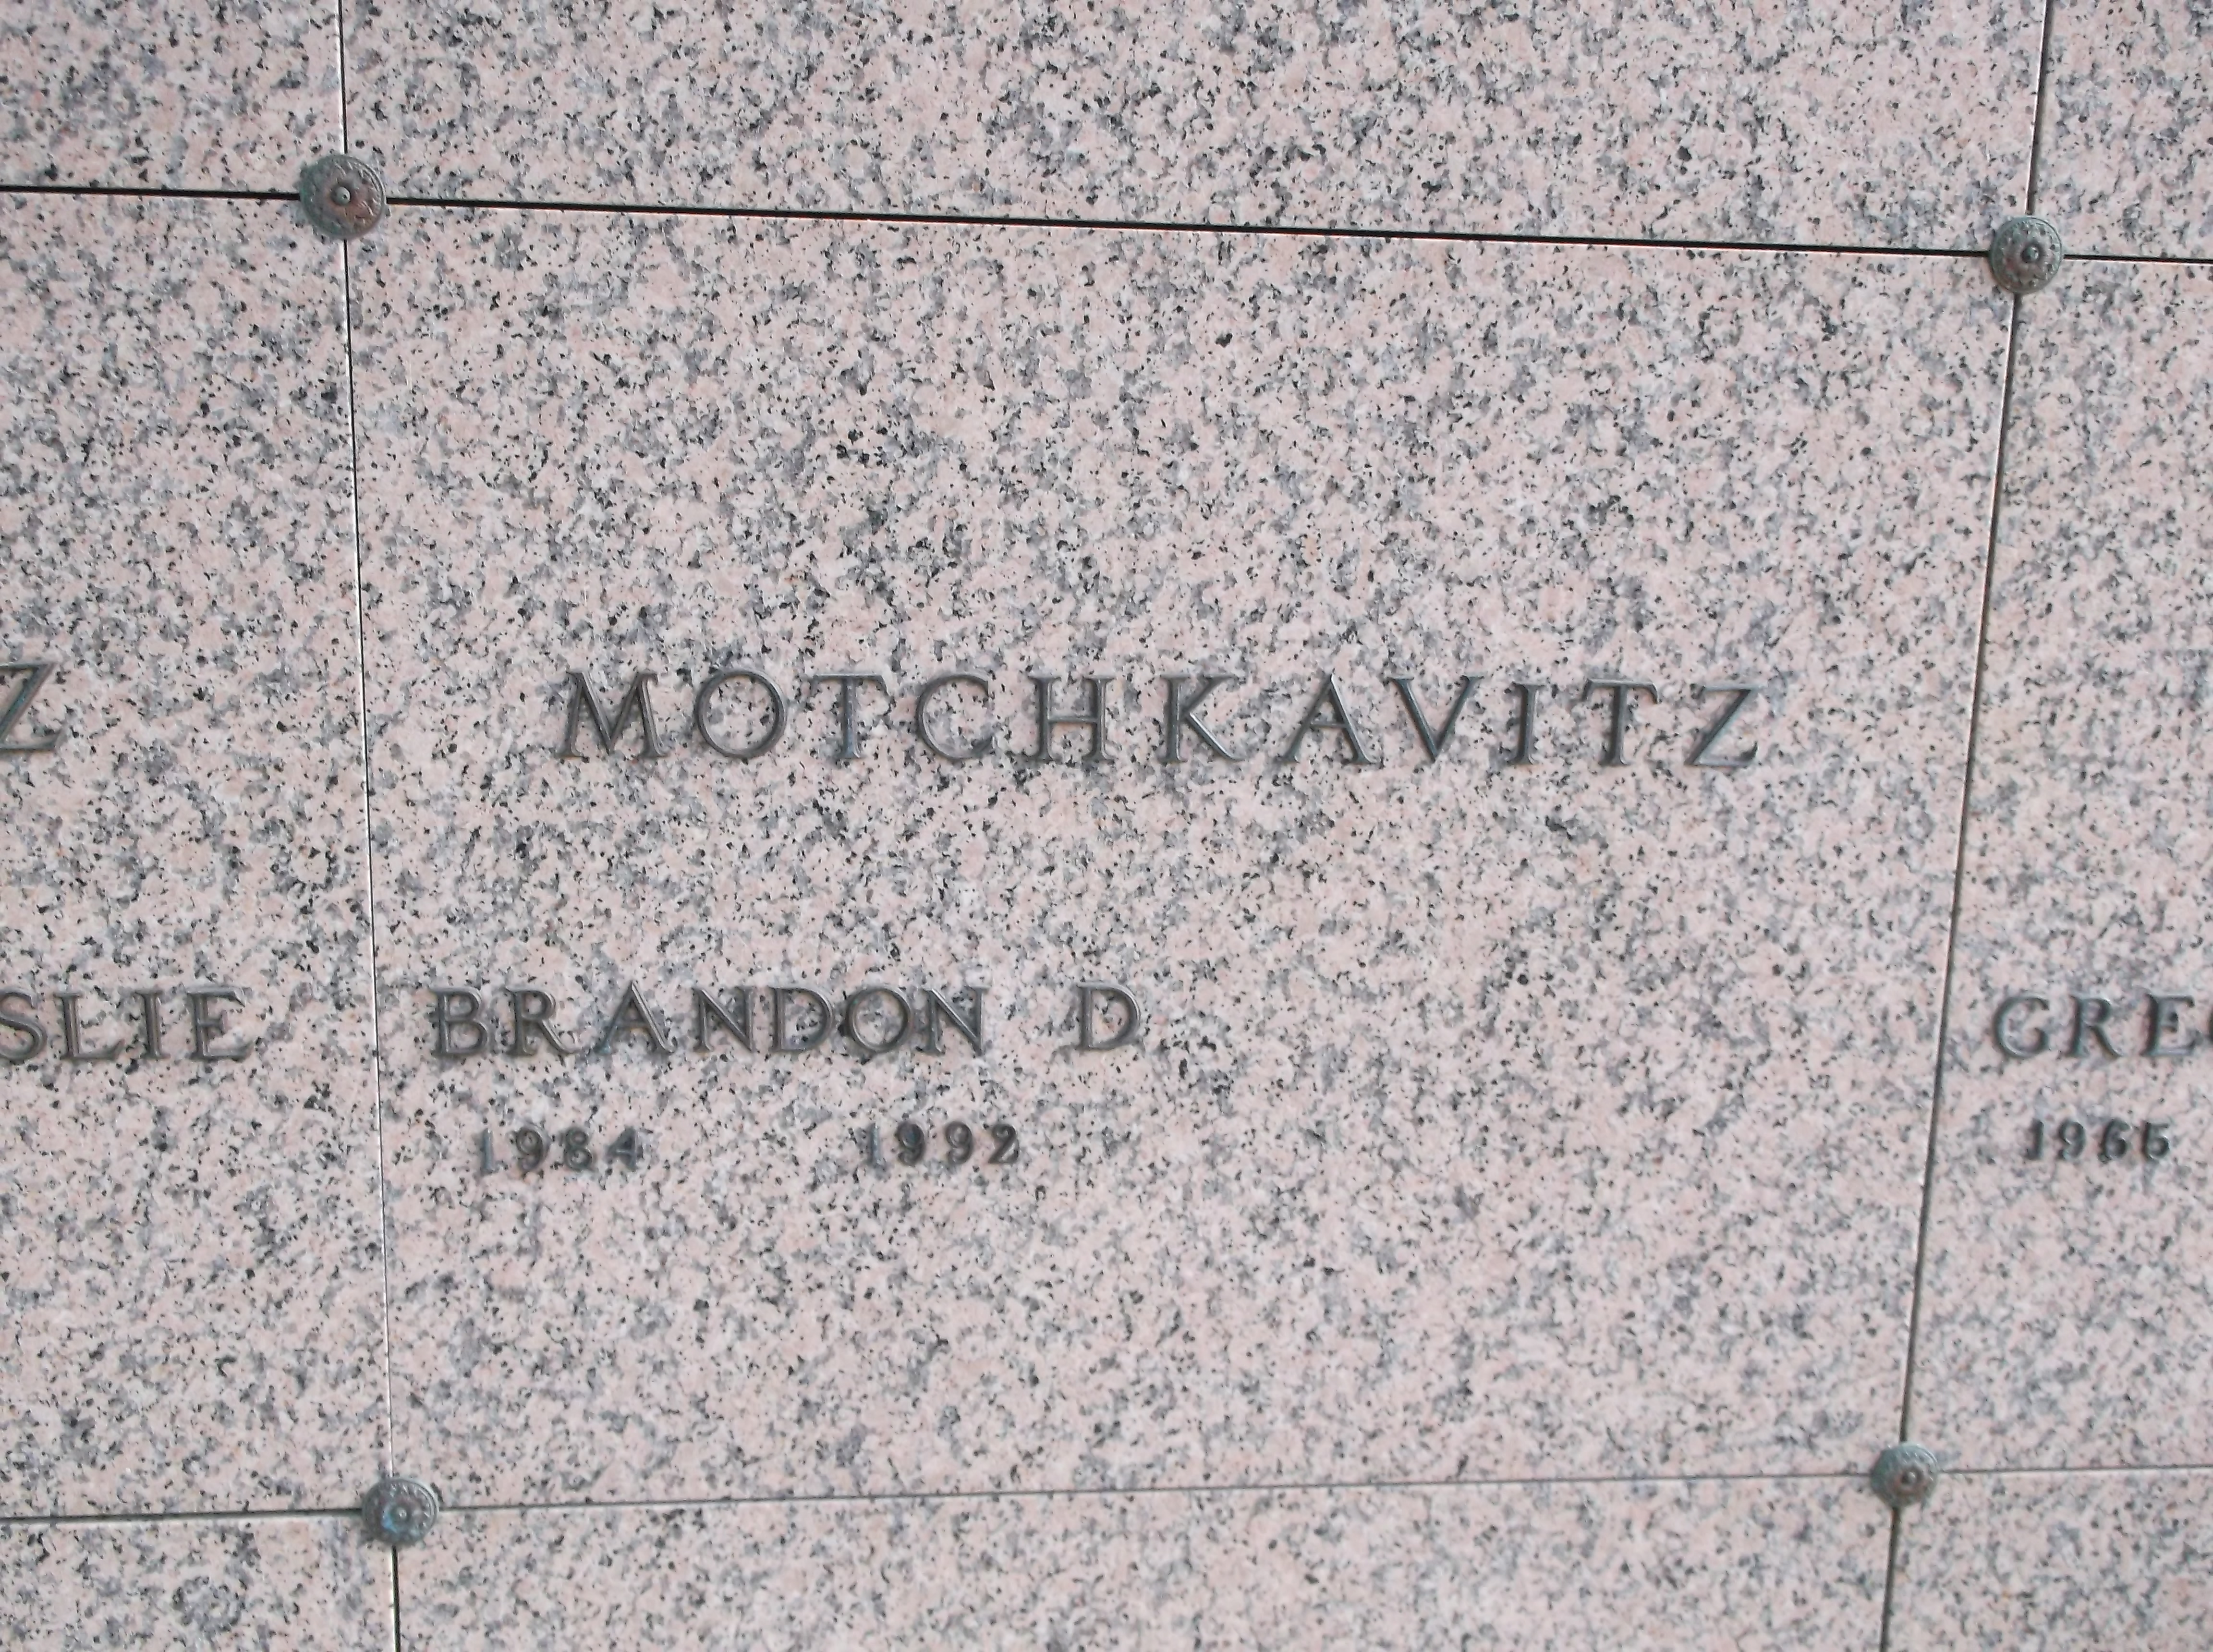 Brandon D Motchkavitz